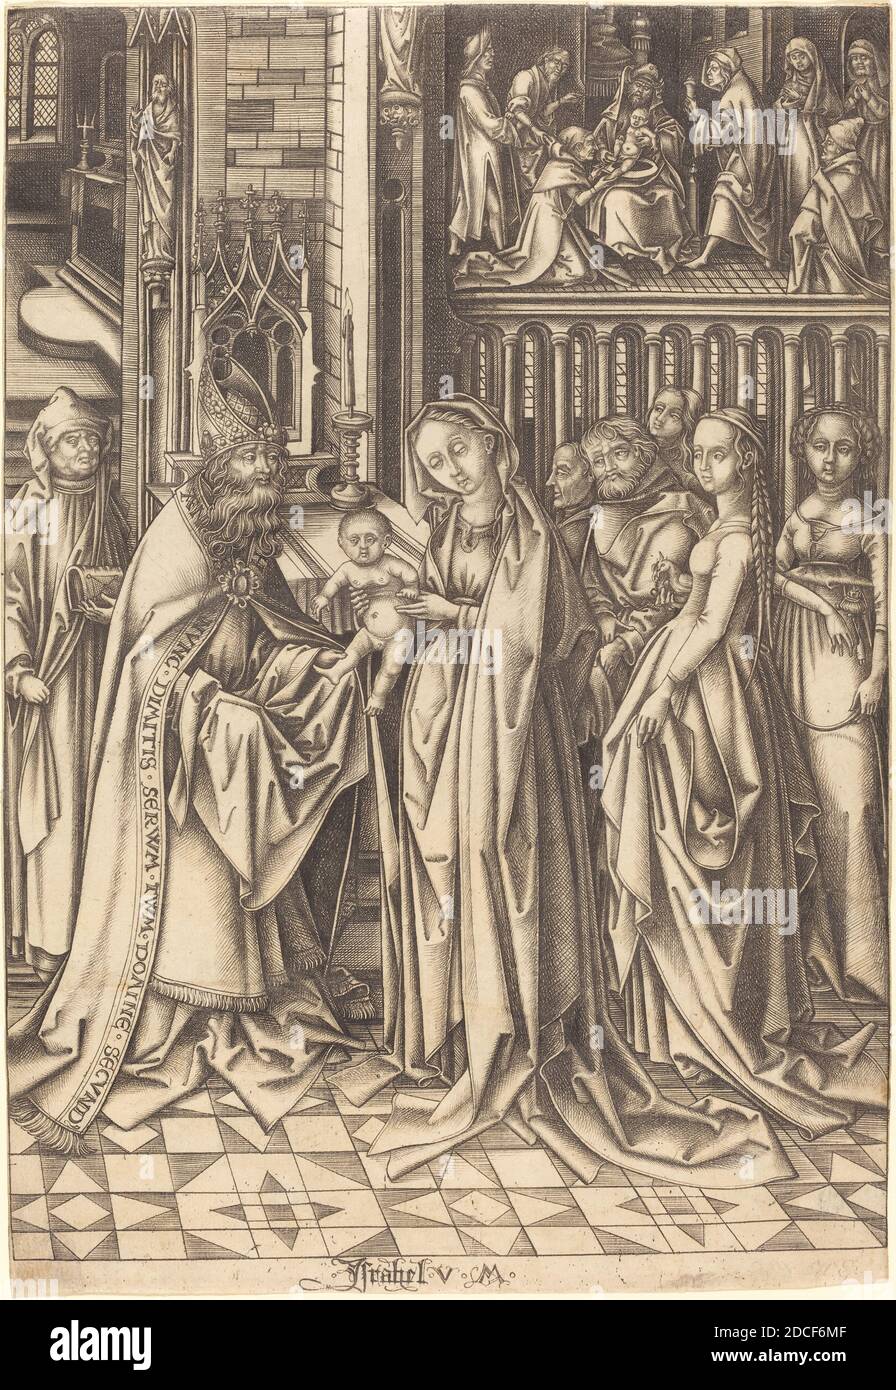 Israhel van Meckenem, (artist), German, c. 1445 - 1503, Hans Holbein the Elder, (artist after), German, c. 1465 - 1524, The Presentation in the Temple, The Life of the Virgin, (series), c. 1490/1500, engraving Stock Photo